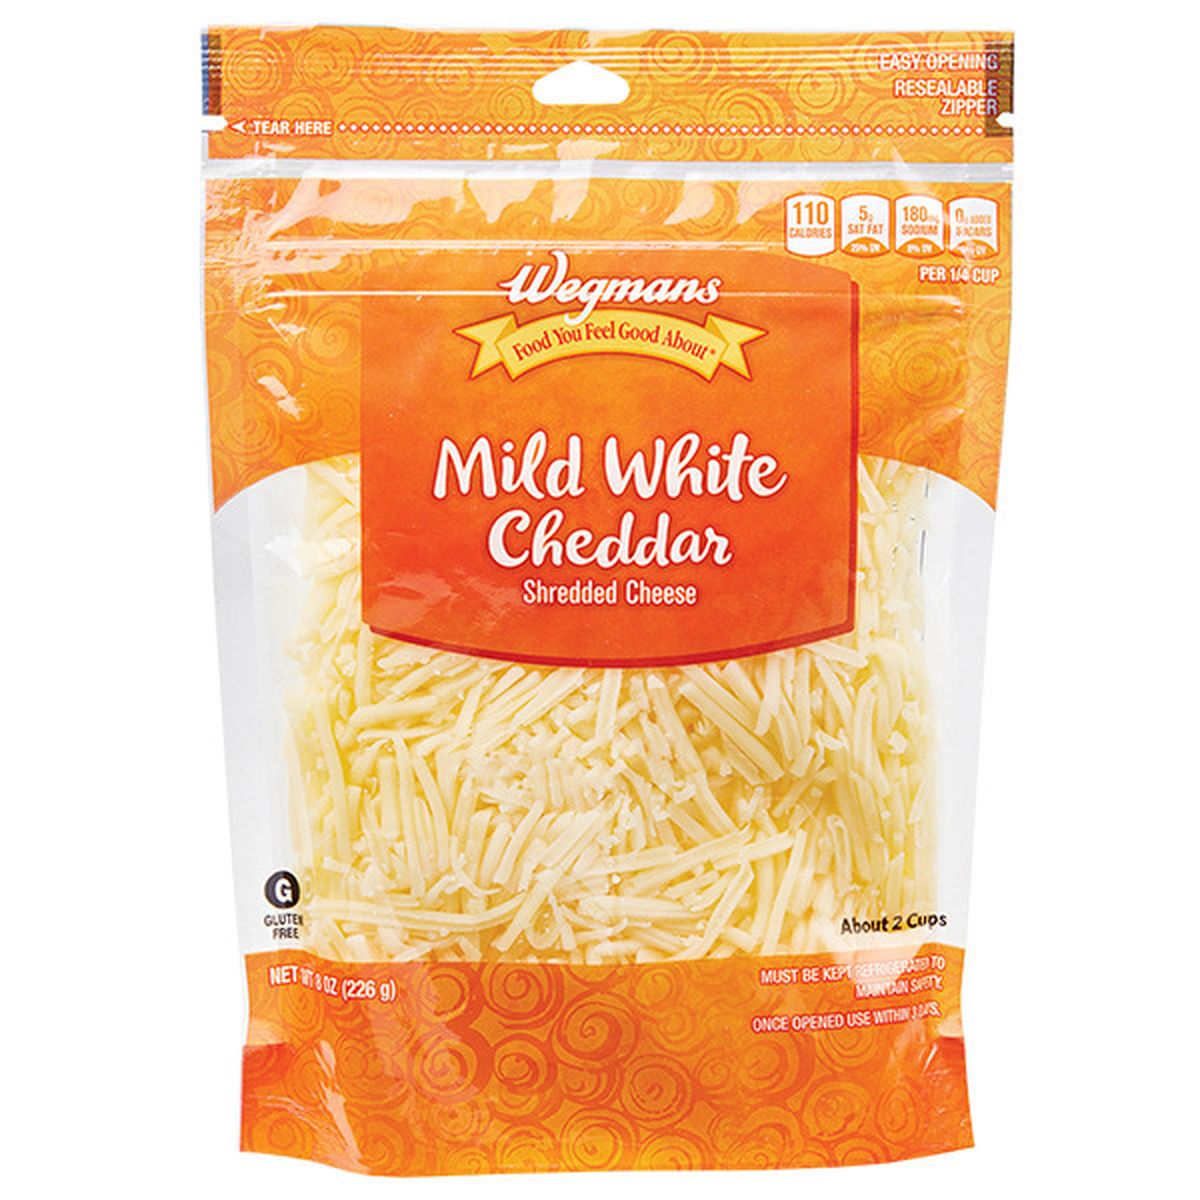 Calories in Wegmans Mild White Cheddar Shredded Cheese